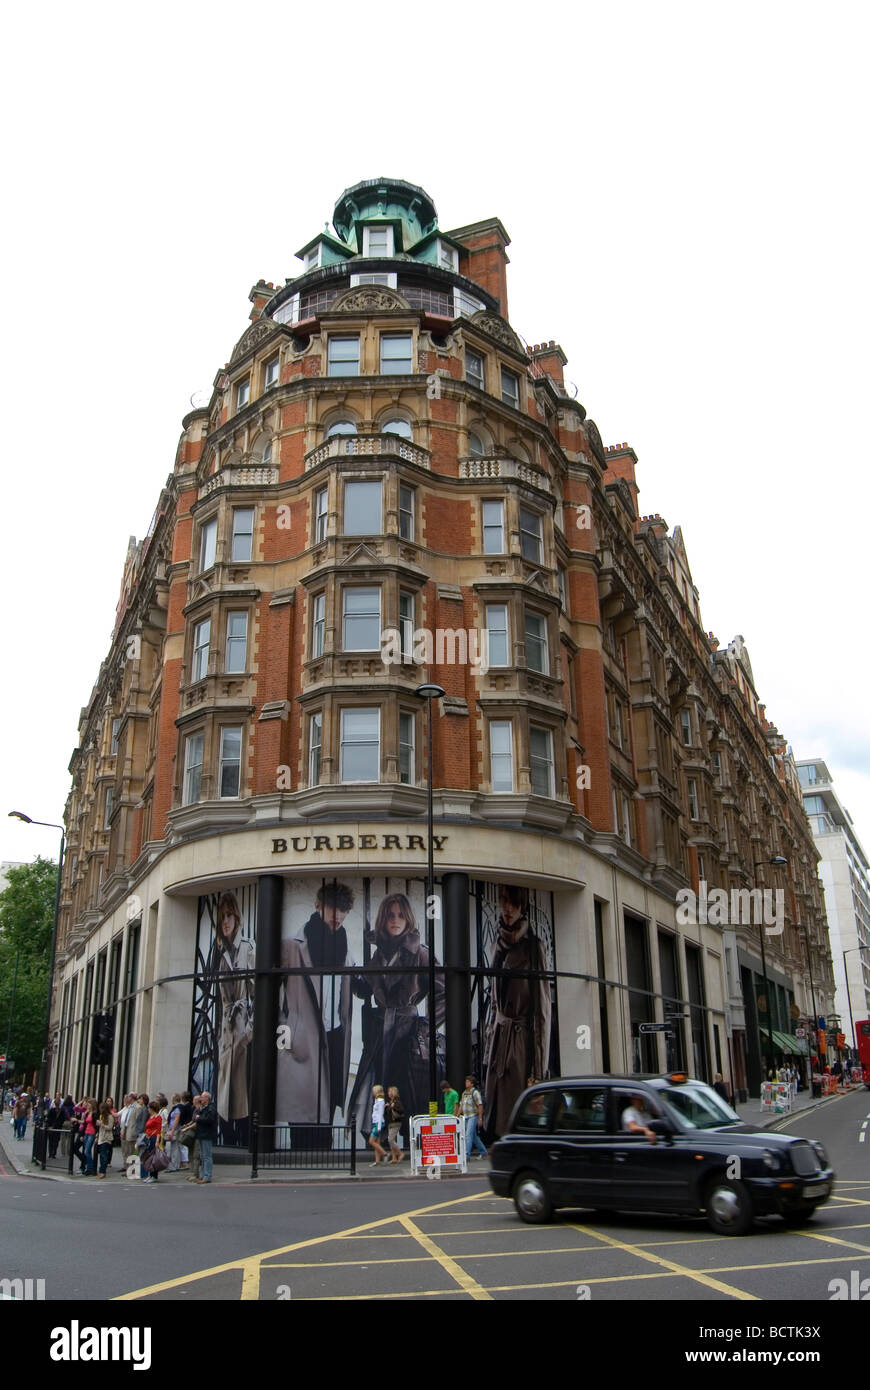 Burberry Headquarters at London Stock Photo - Alamy